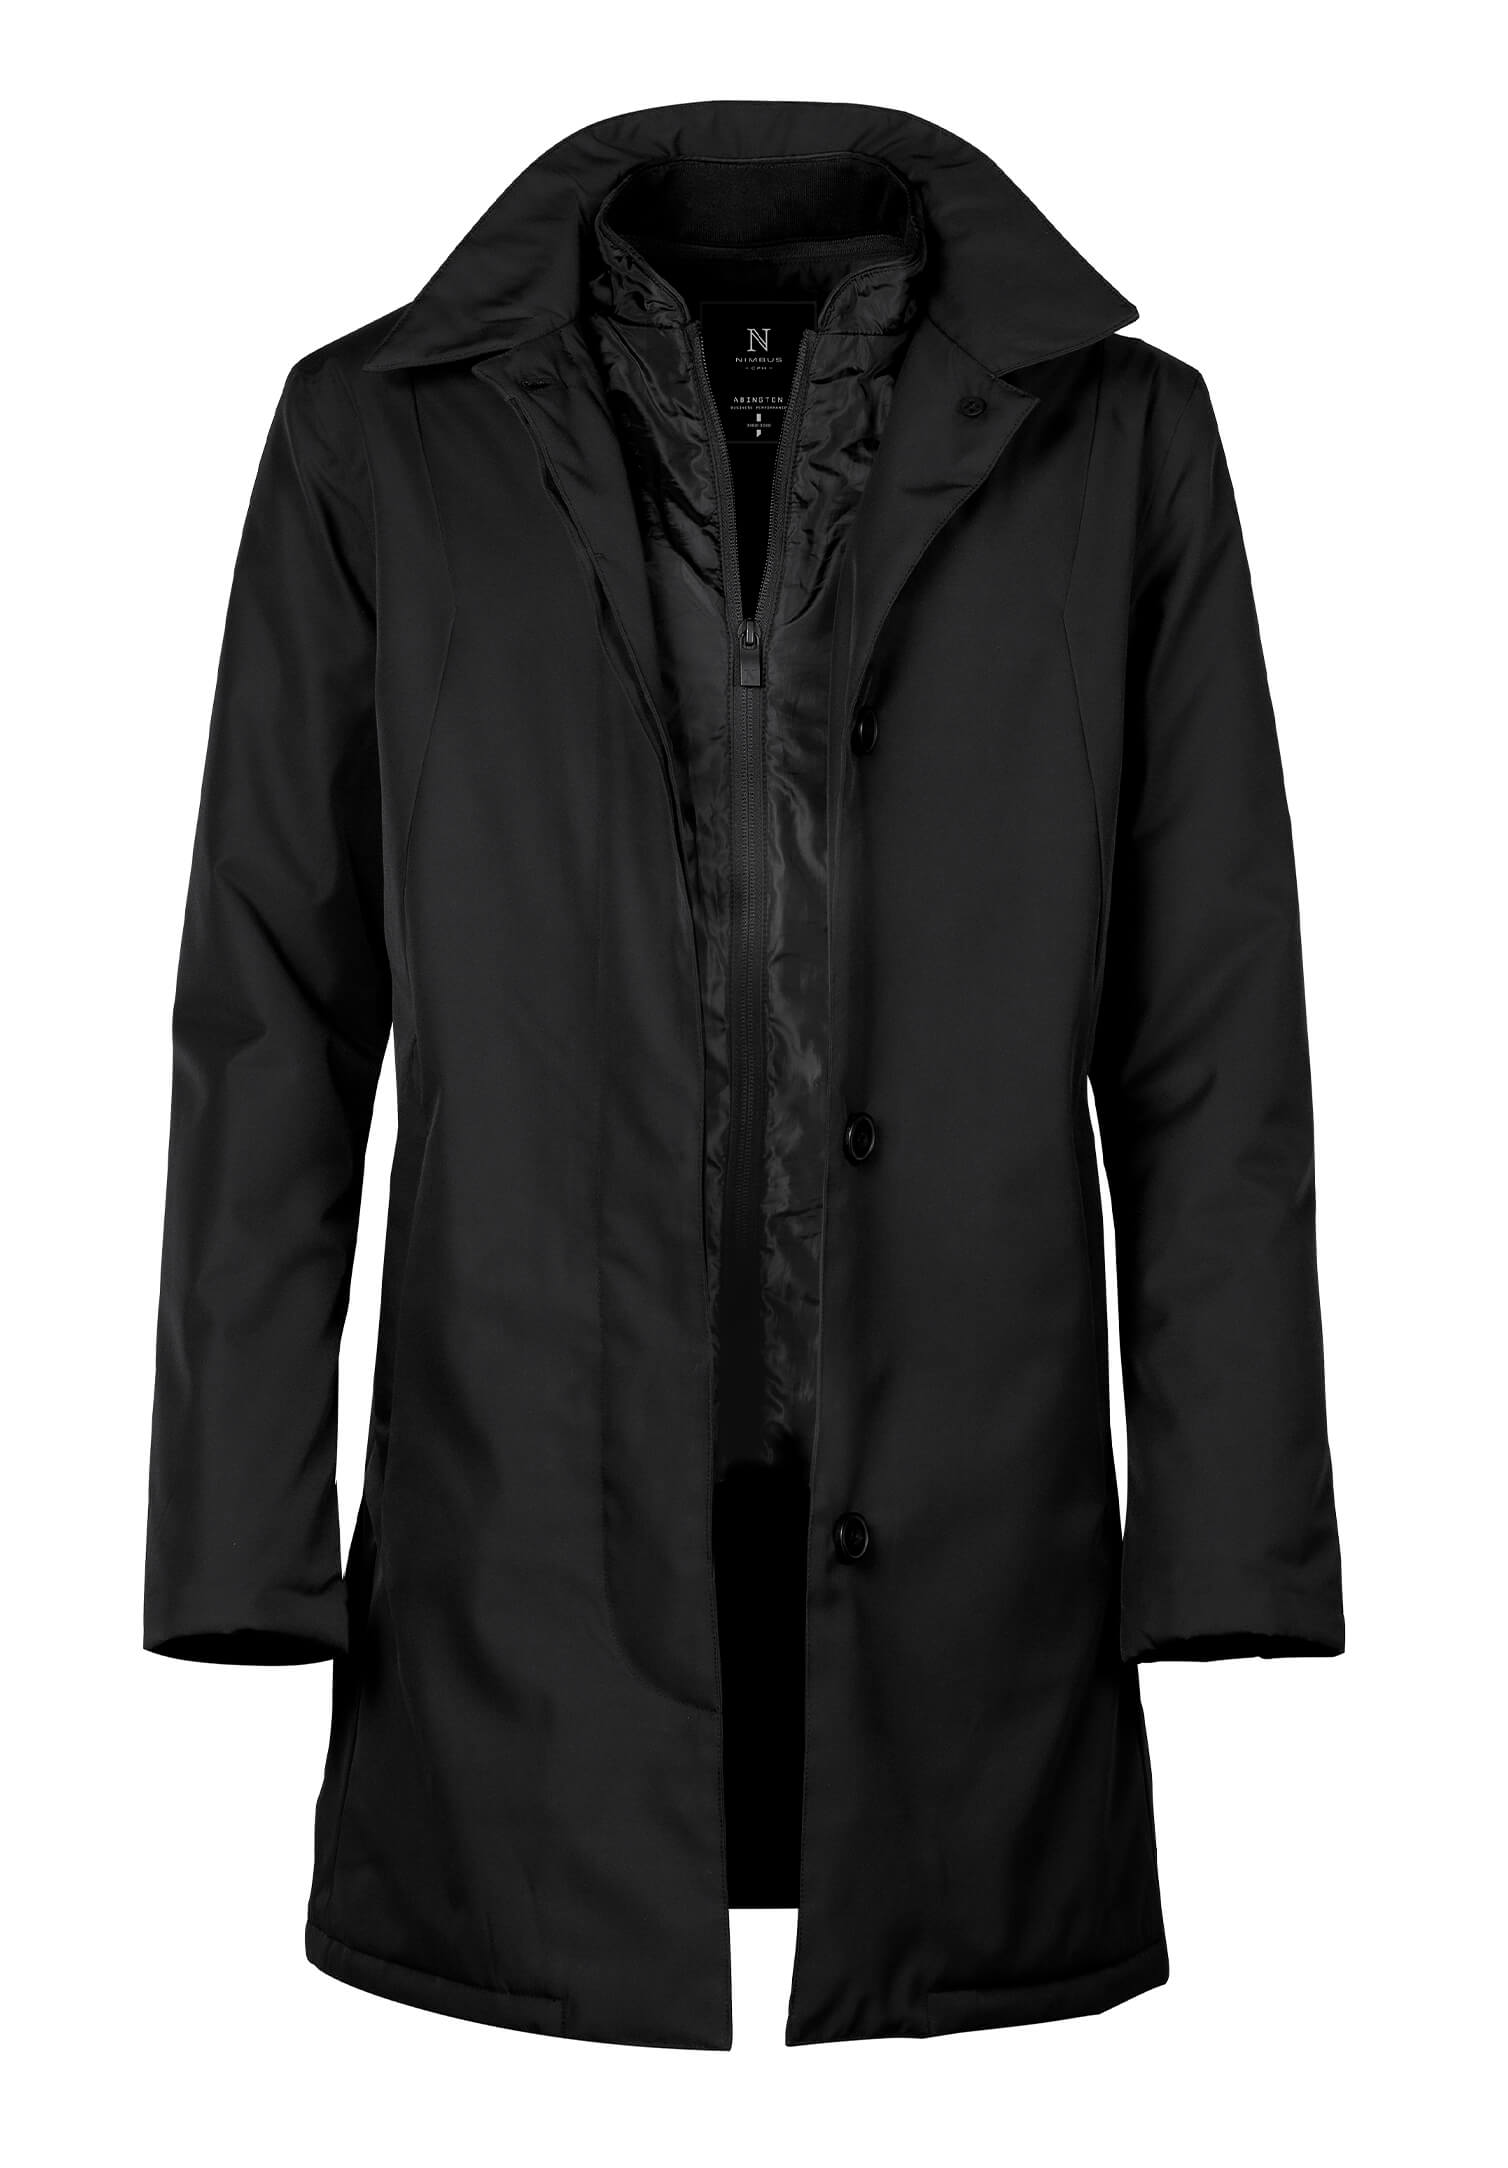 Damen Long Jacket mit Windleiste - schwarz - XS